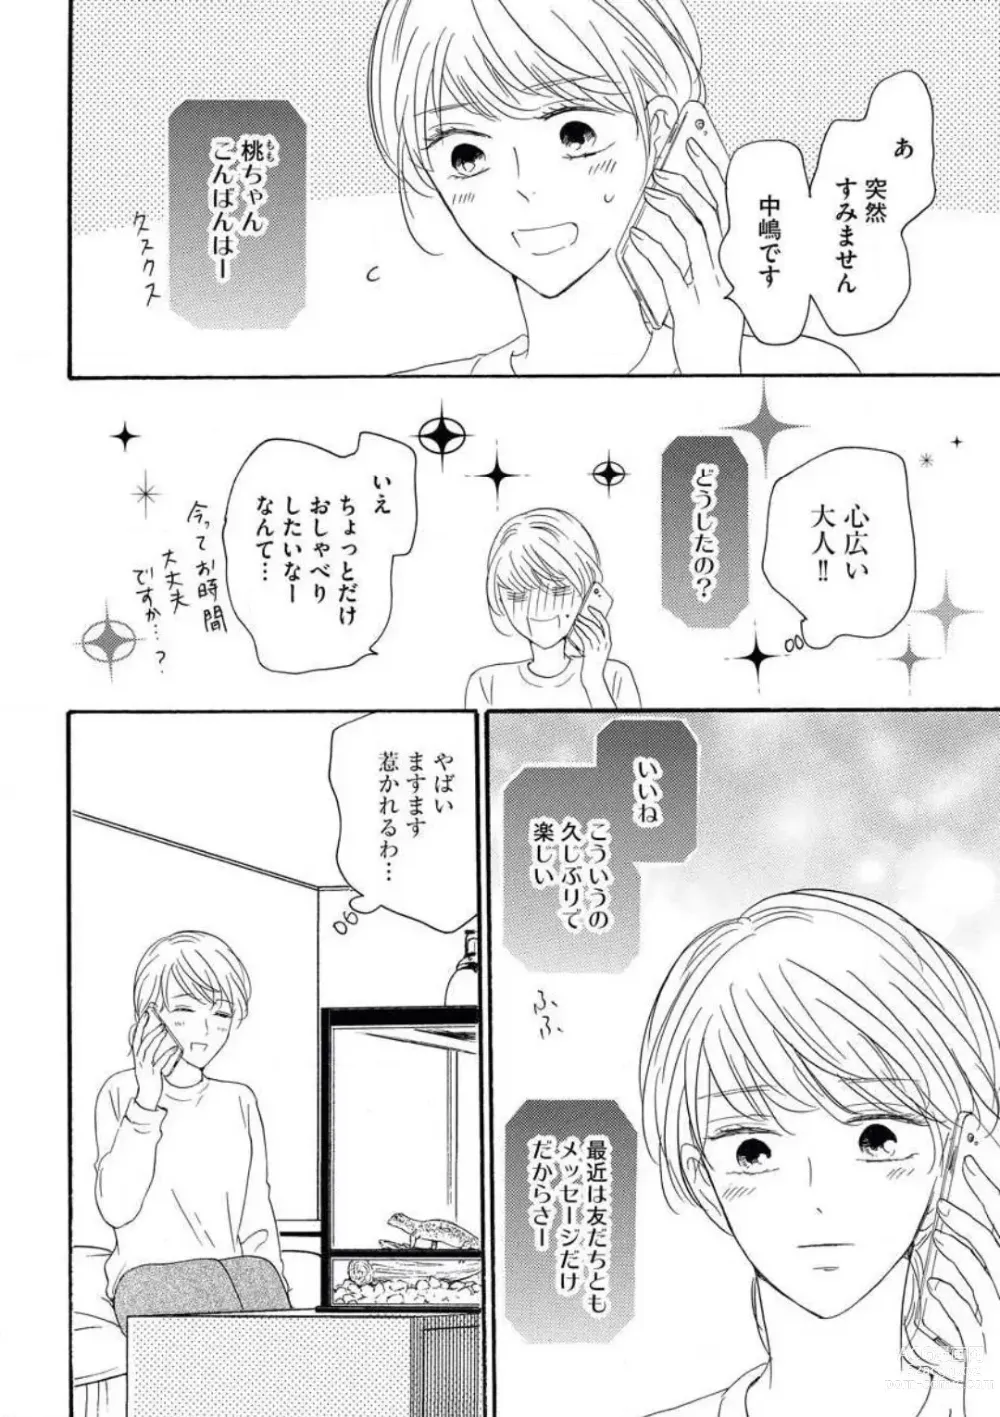 Page 15 of manga Giwaku no Rabu Matchingu